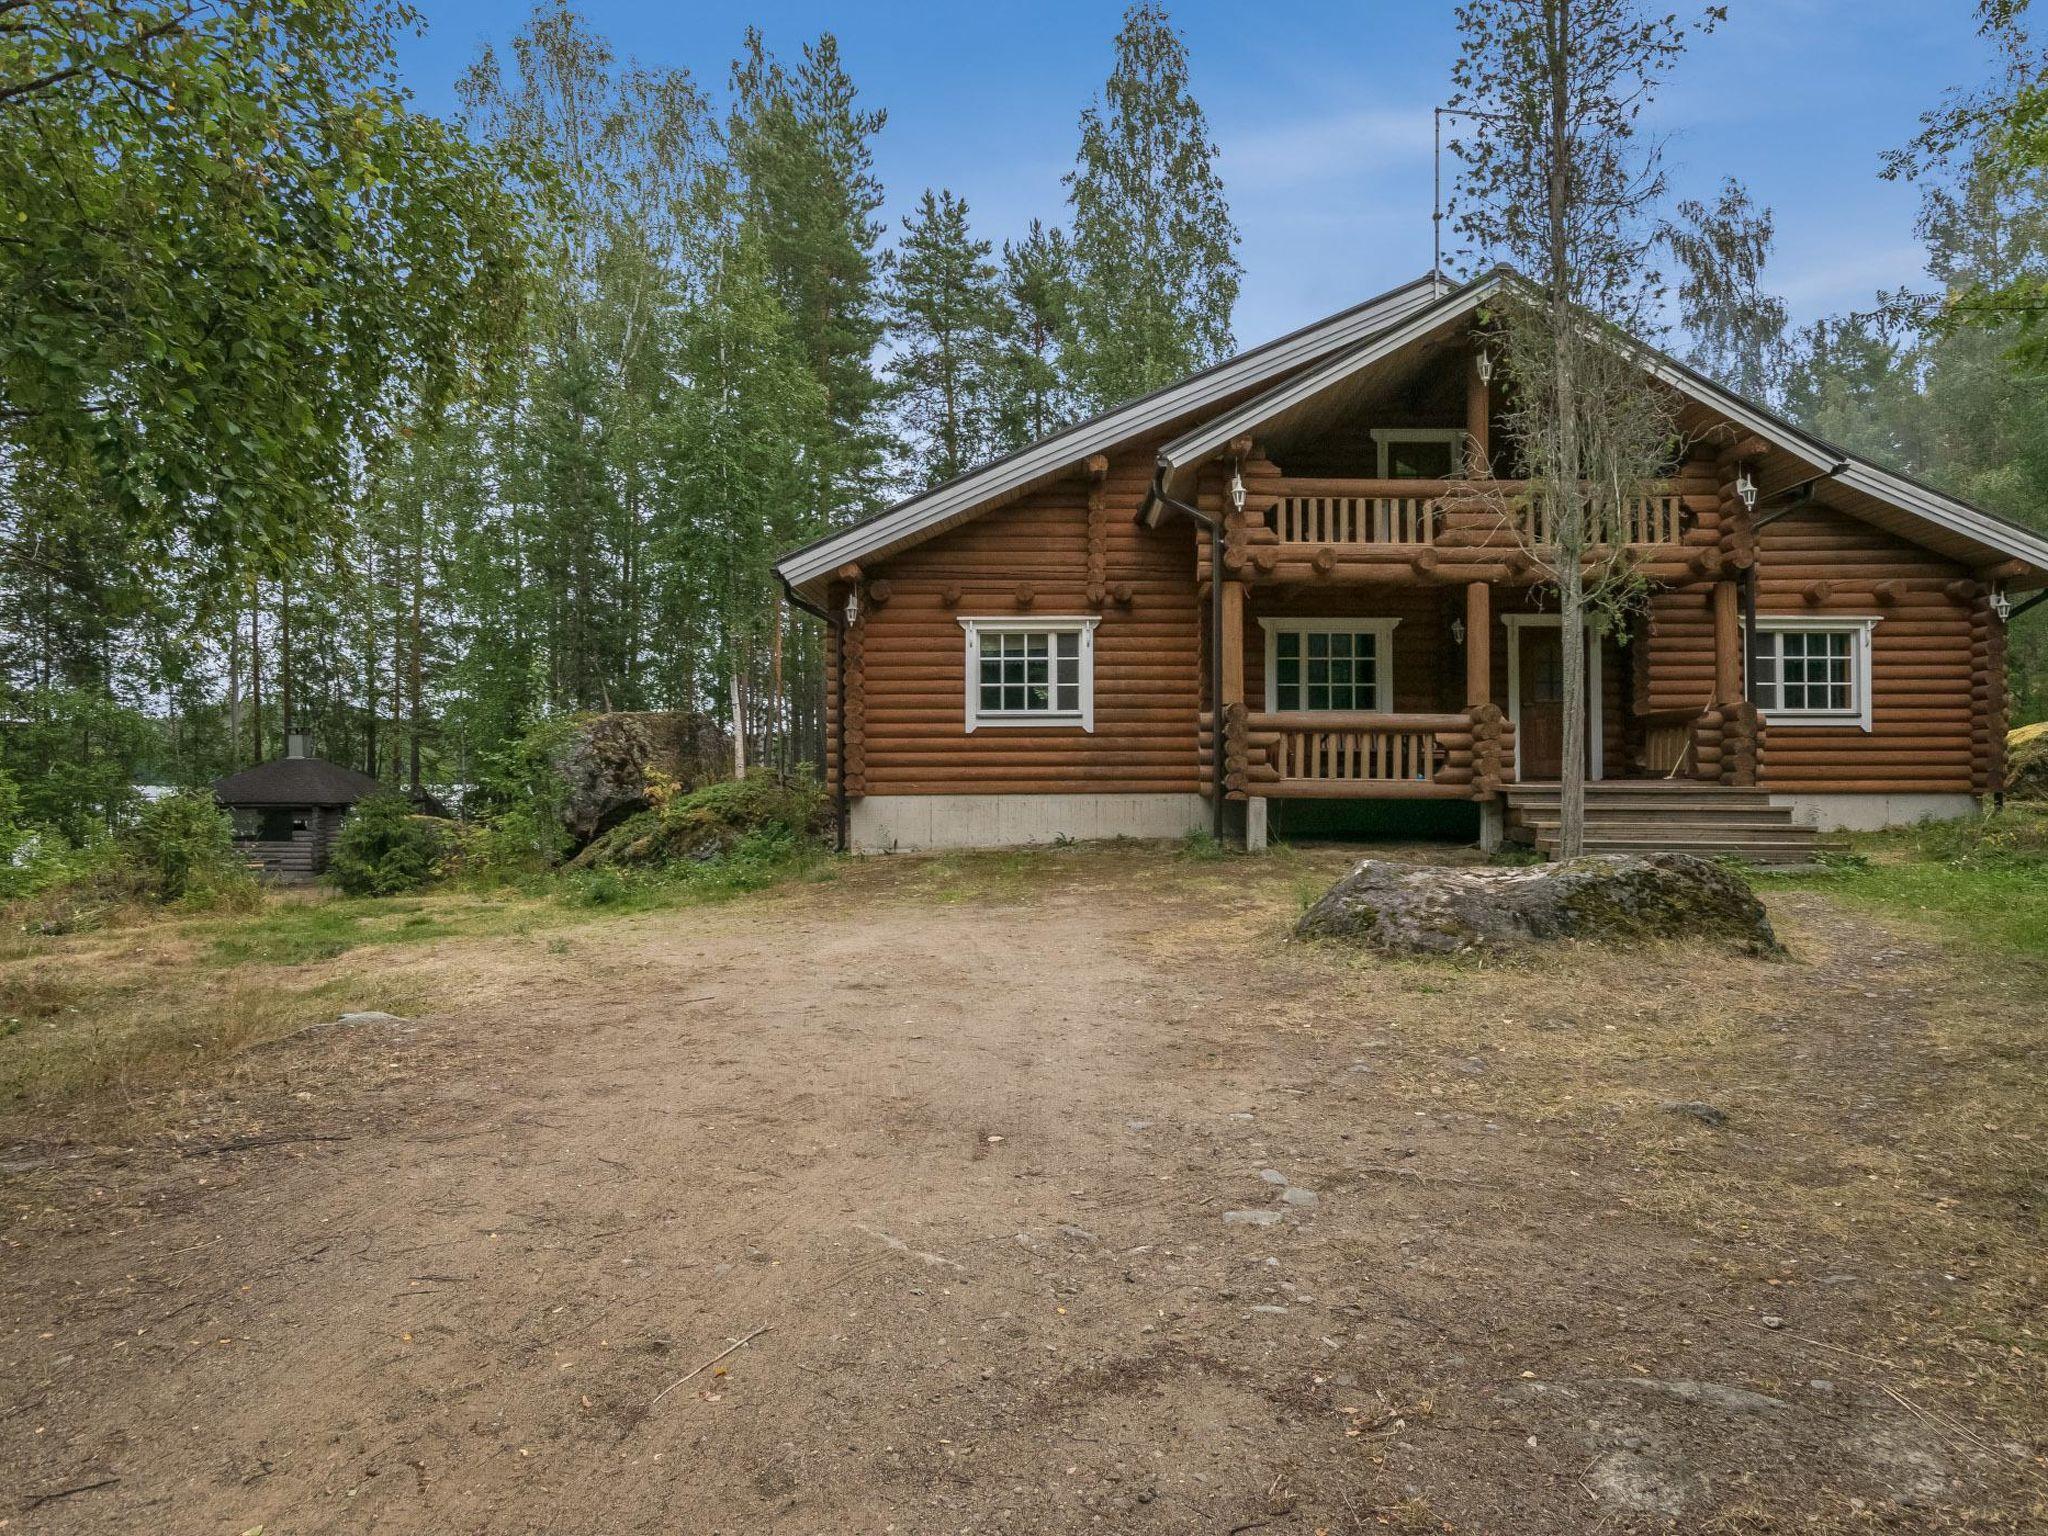 Photo 1 - 5 bedroom House in Mikkeli with sauna